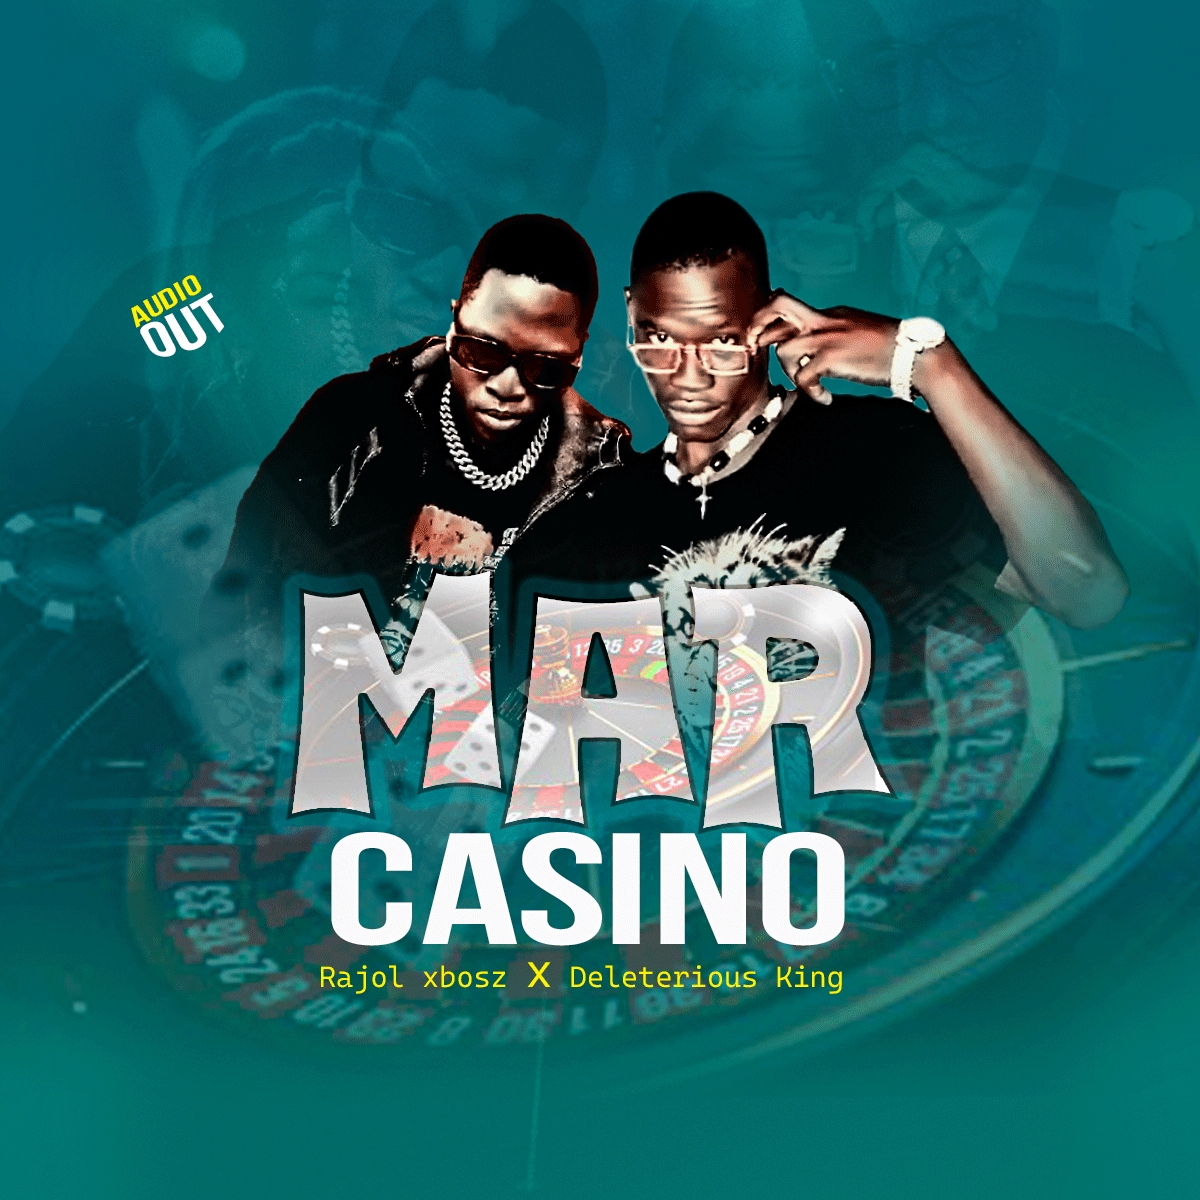 Mar Casino